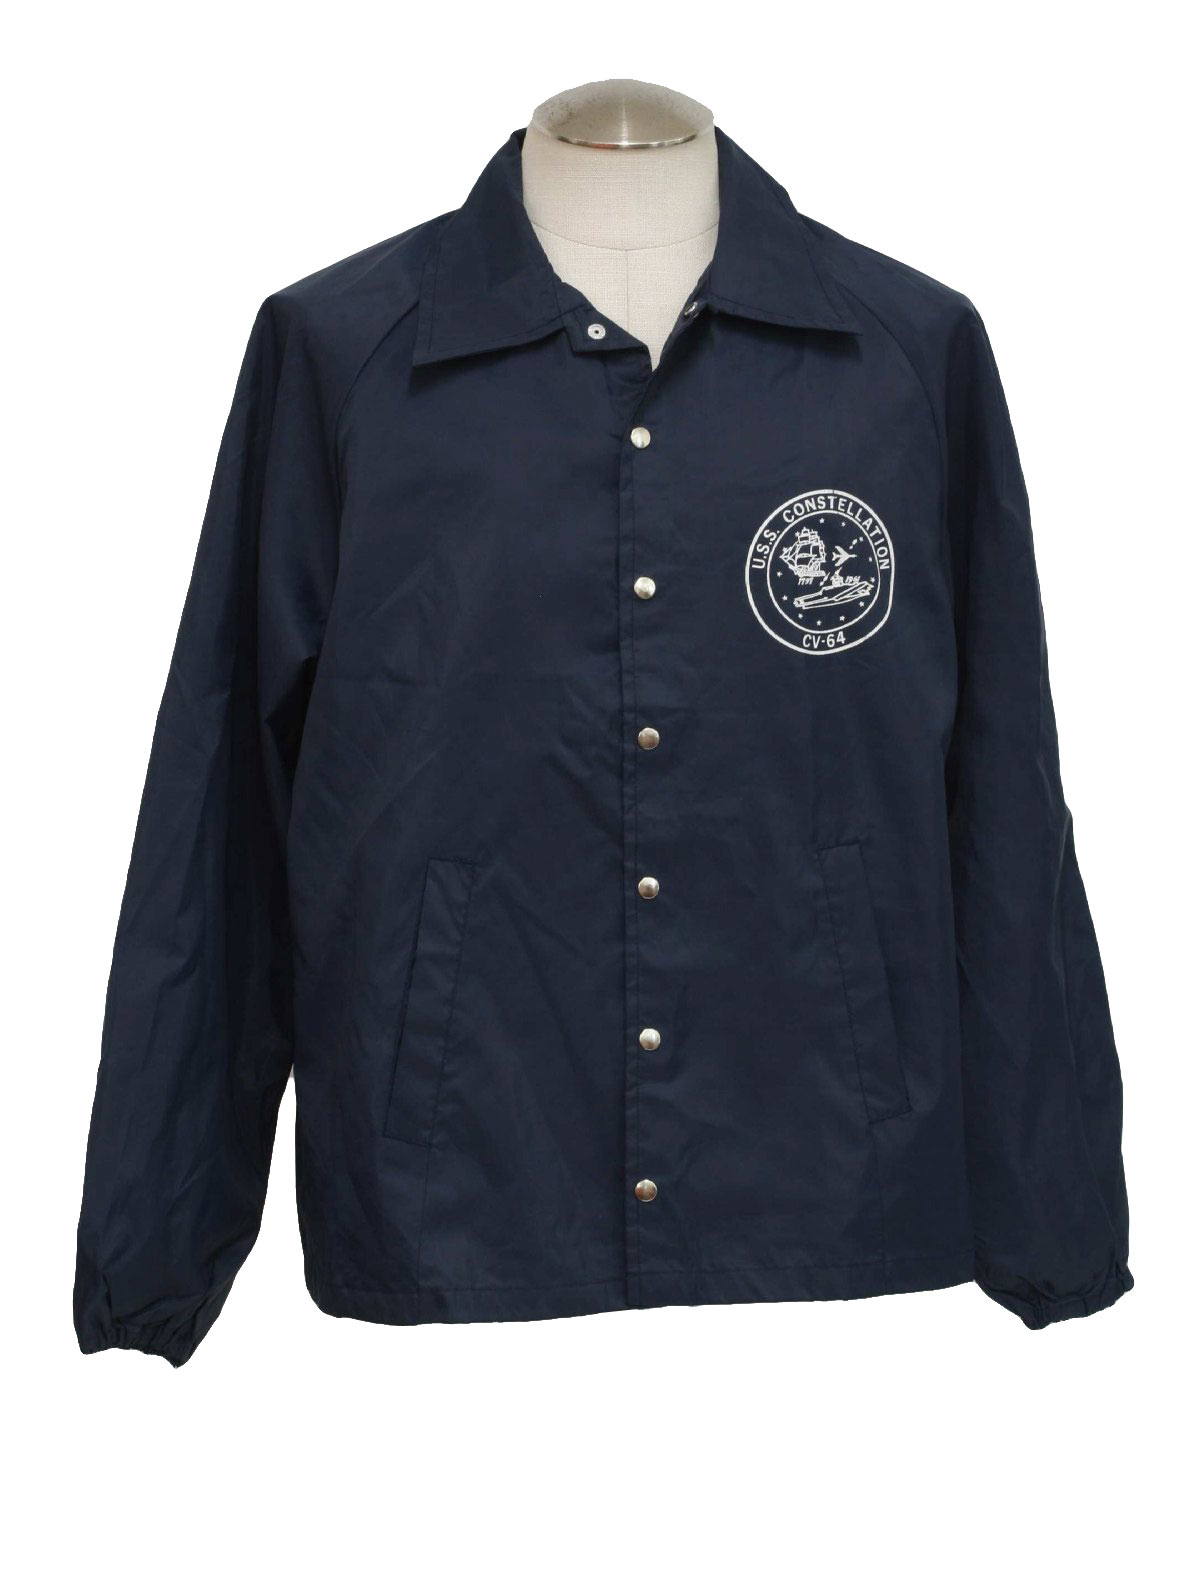 Seventies Care Label Jacket: 70s -Care Label- Mens dark blue nylon